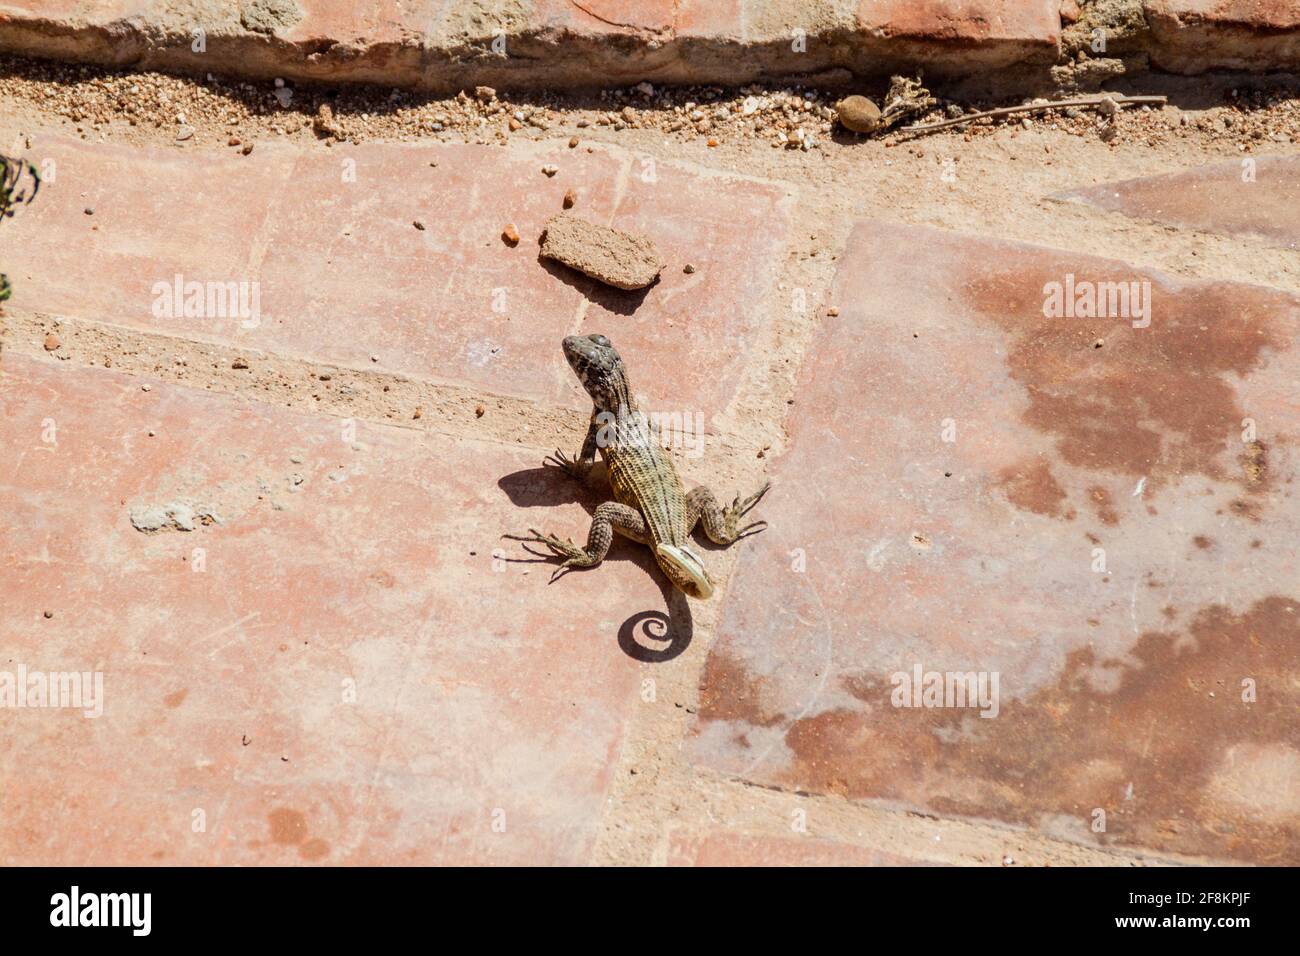 Curly-tailed lizard (Leiocephalus) in Trinidad, Cuba Stock Photo